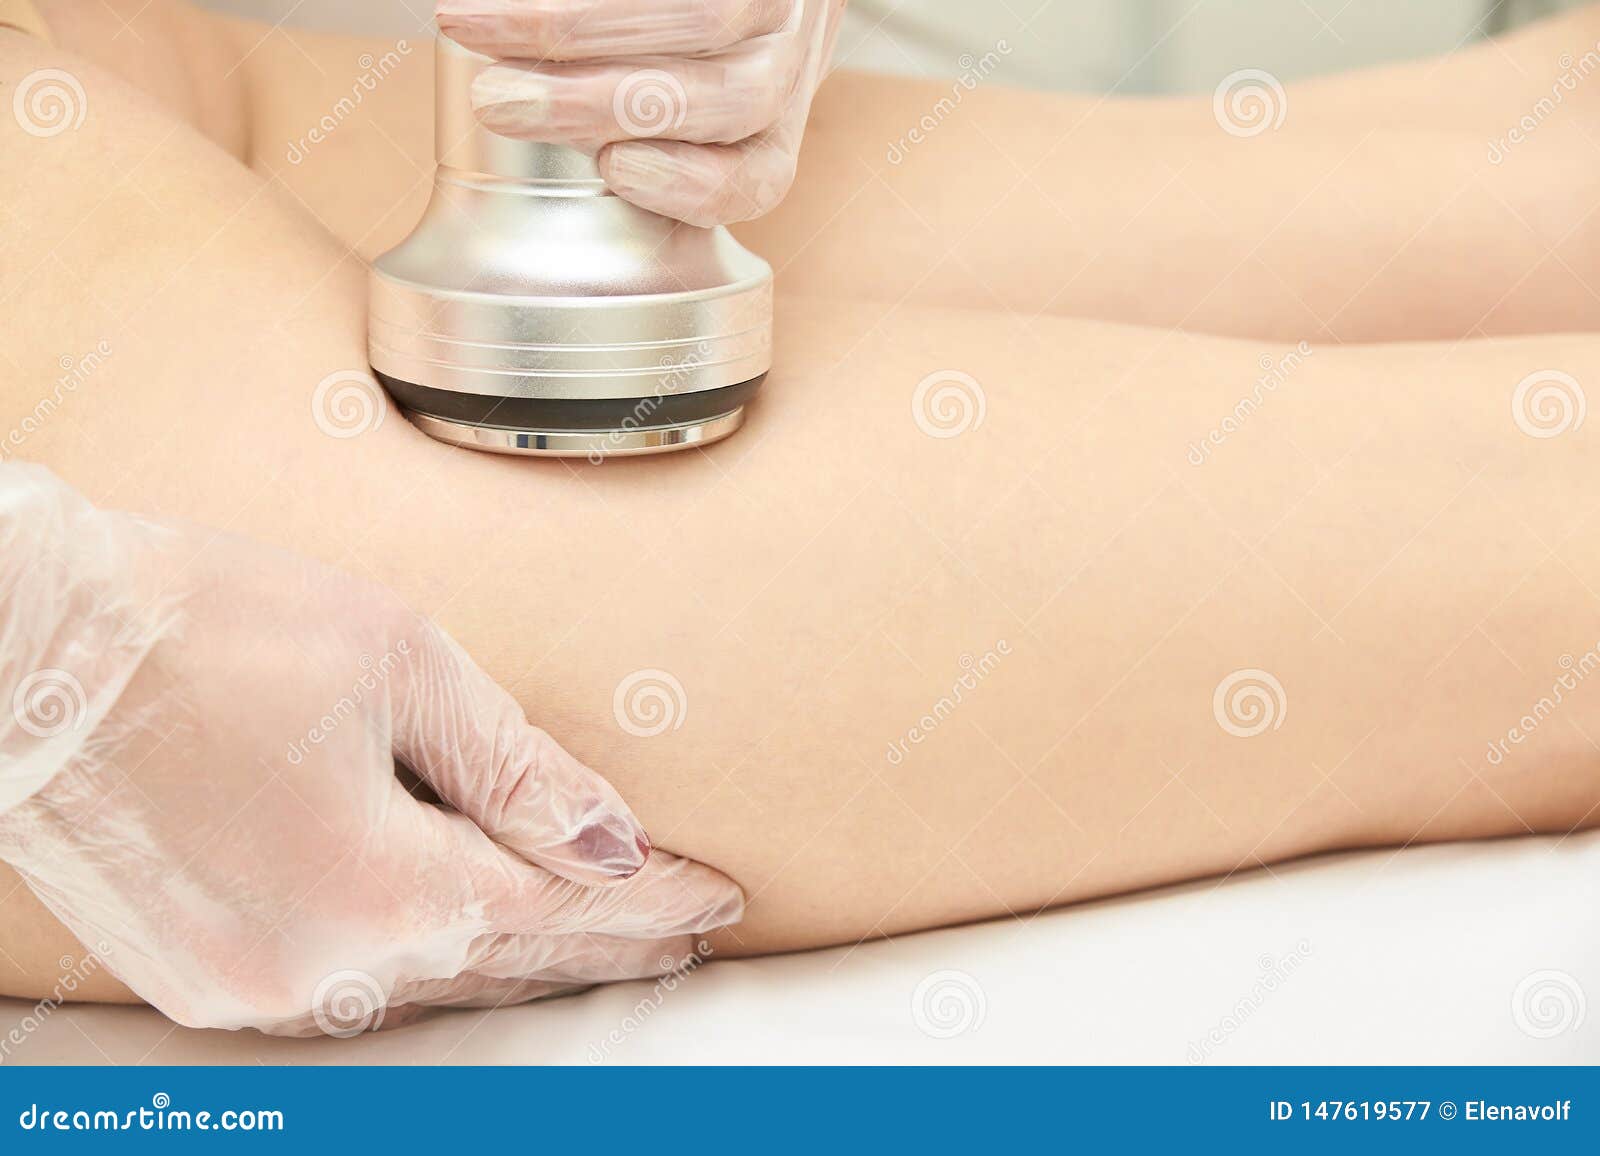 cavitation machine therapy. woman body lipo treatment. ultrasound salon device. radio frequency cosmetology procedure